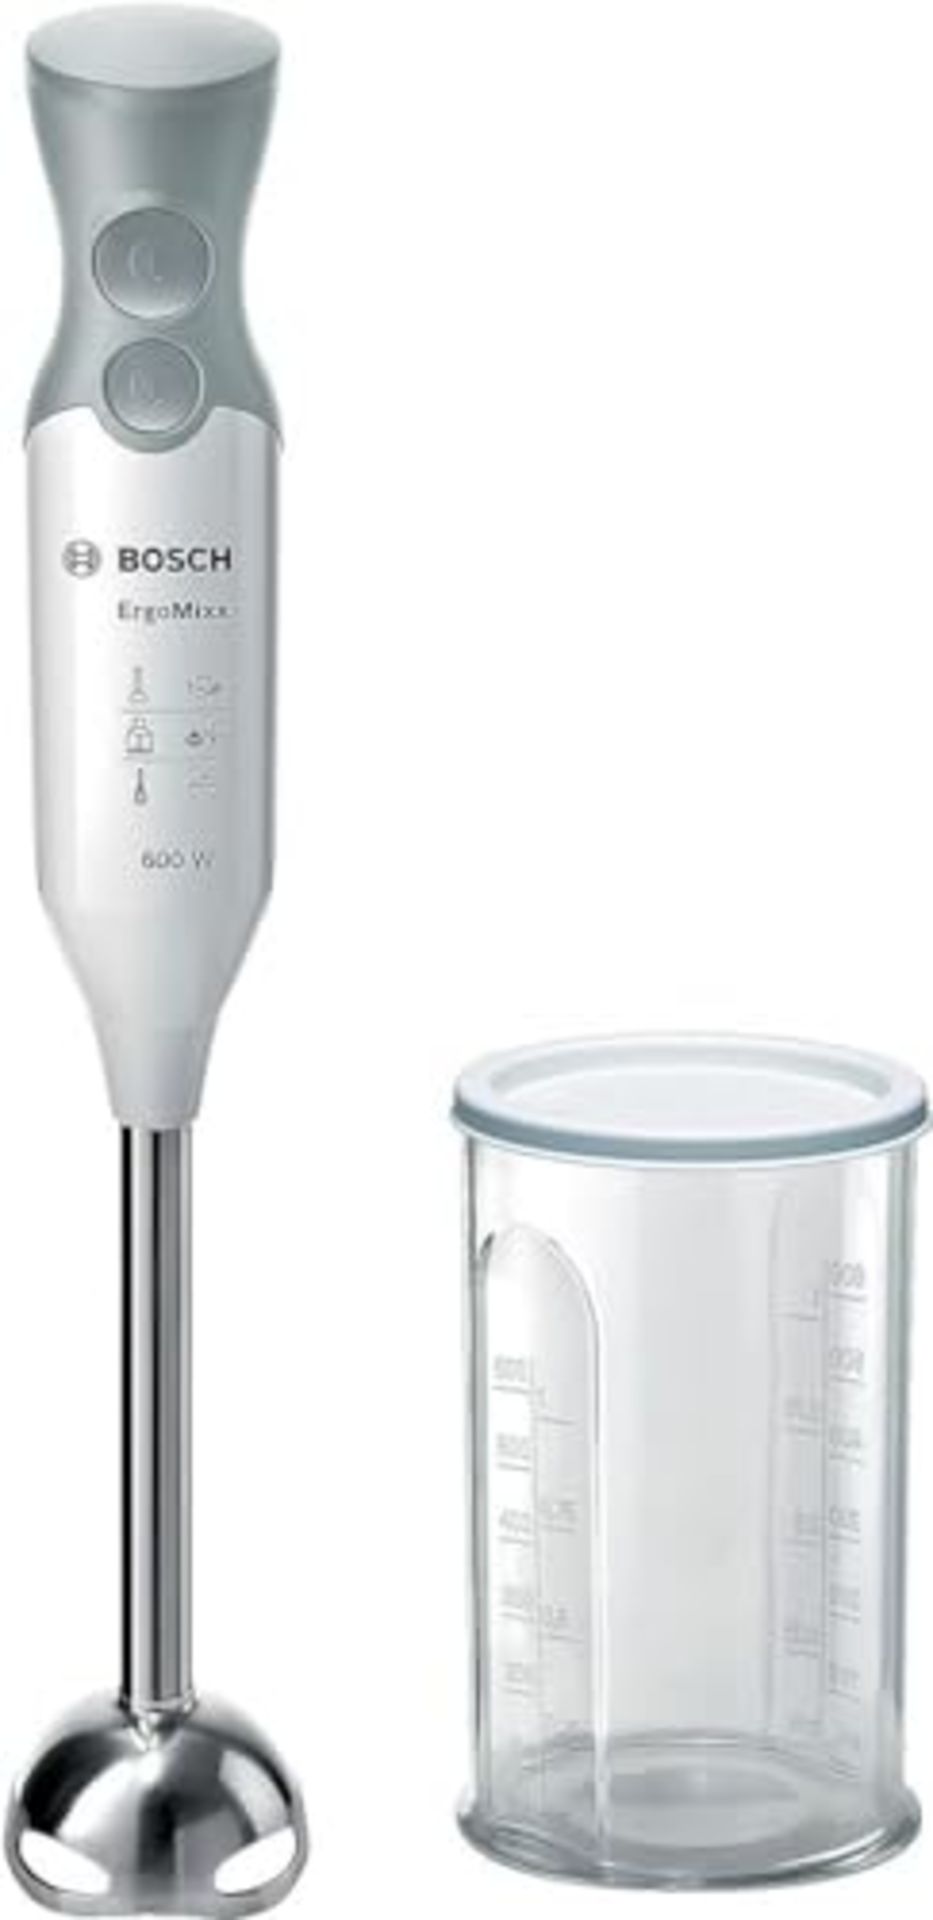 Bosch MSM66110 ErgoMixx Mixeur-Plongeur 600 W, Blanc/Gris